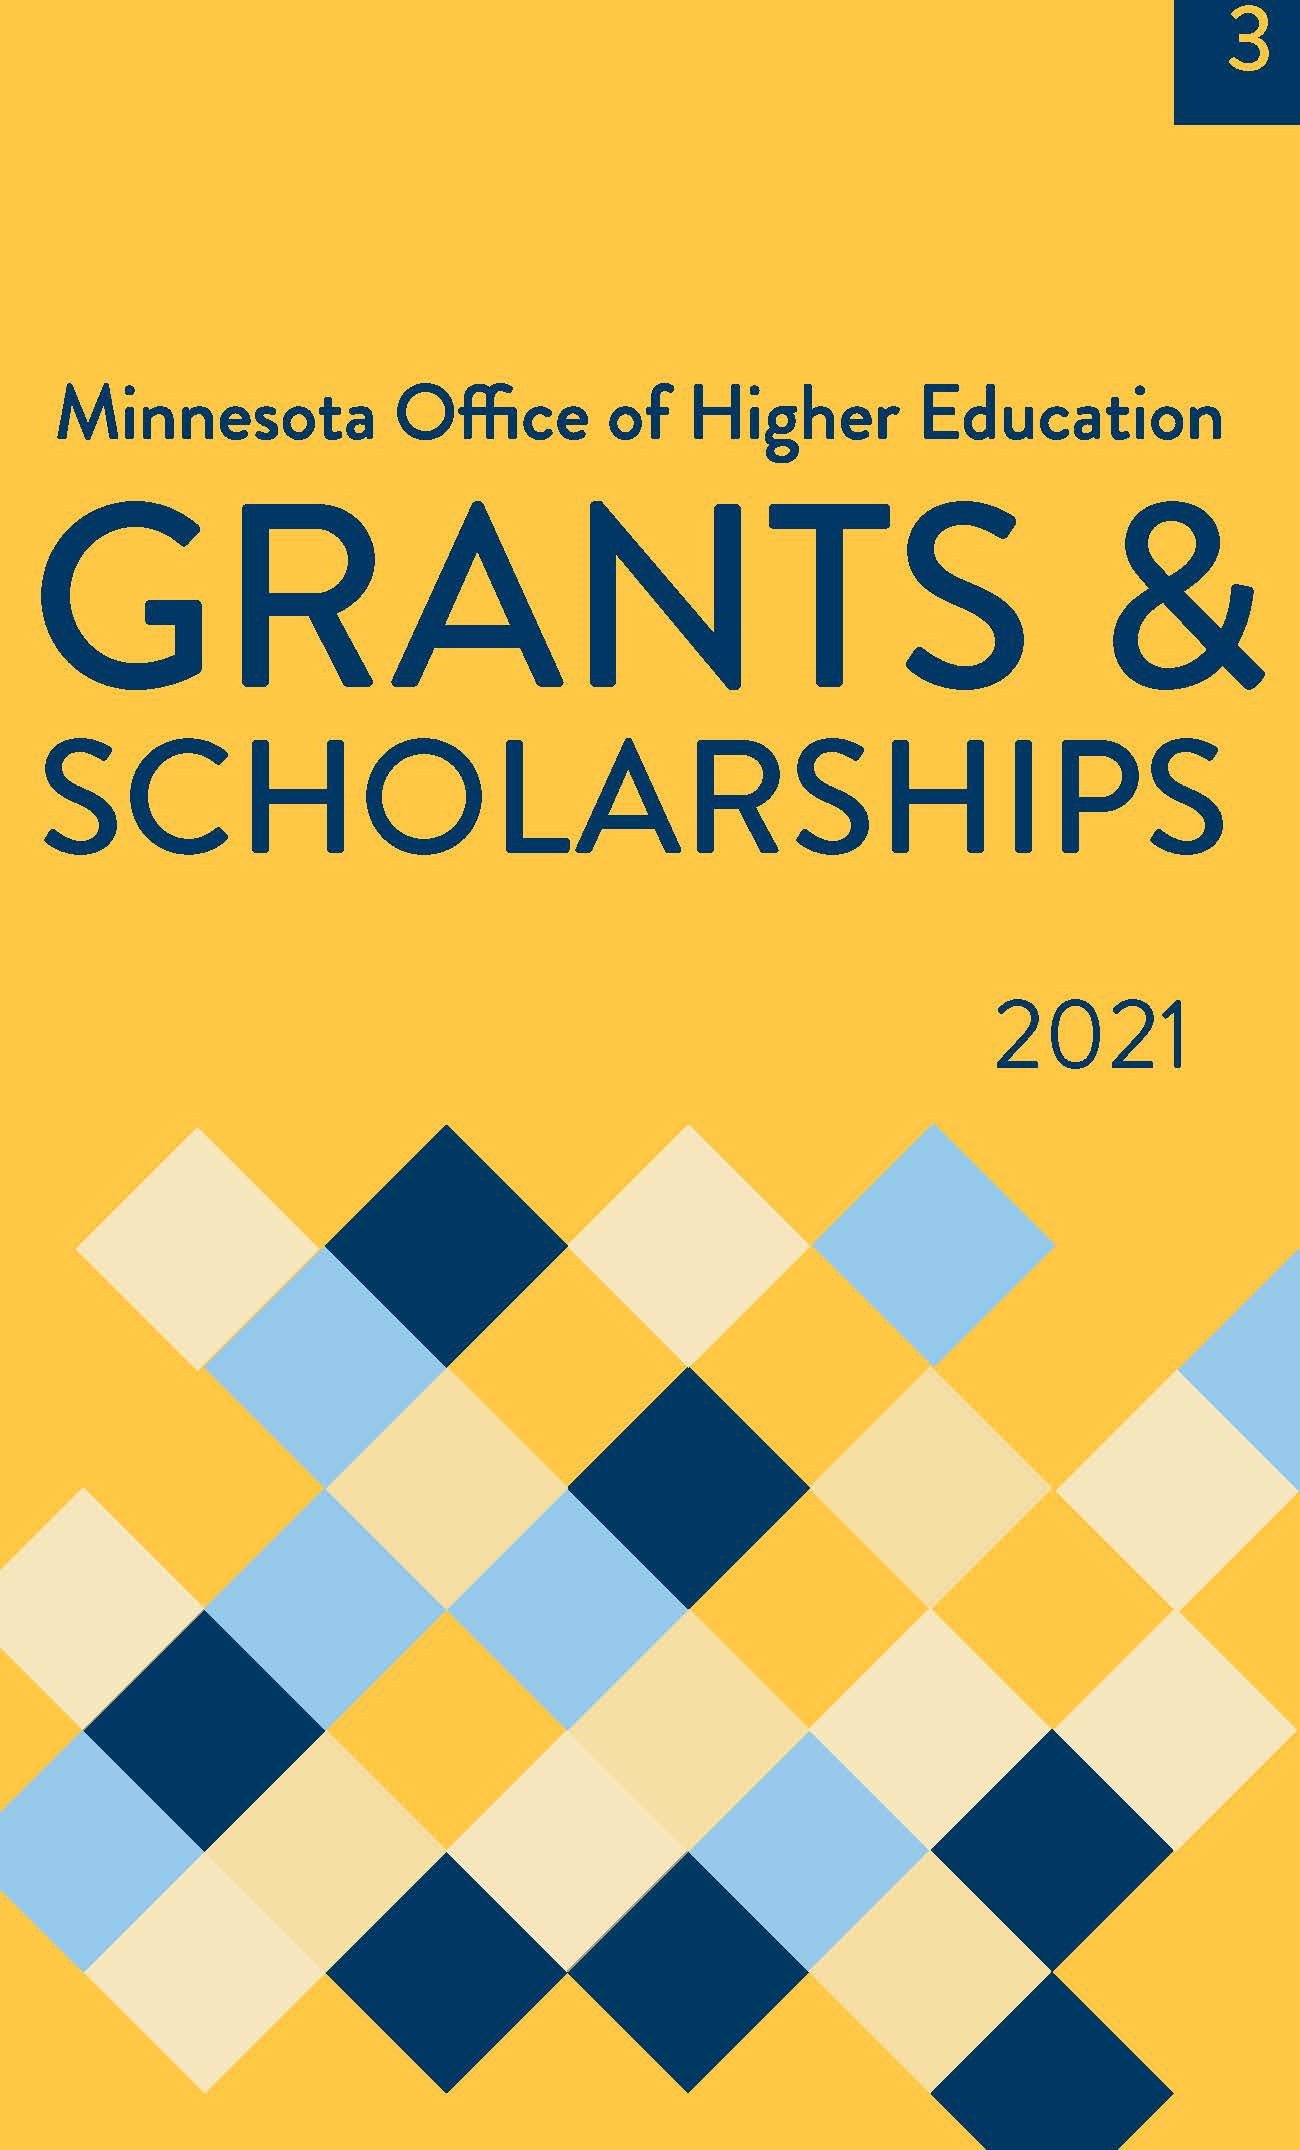 Grants & Scholarships (Free Money)